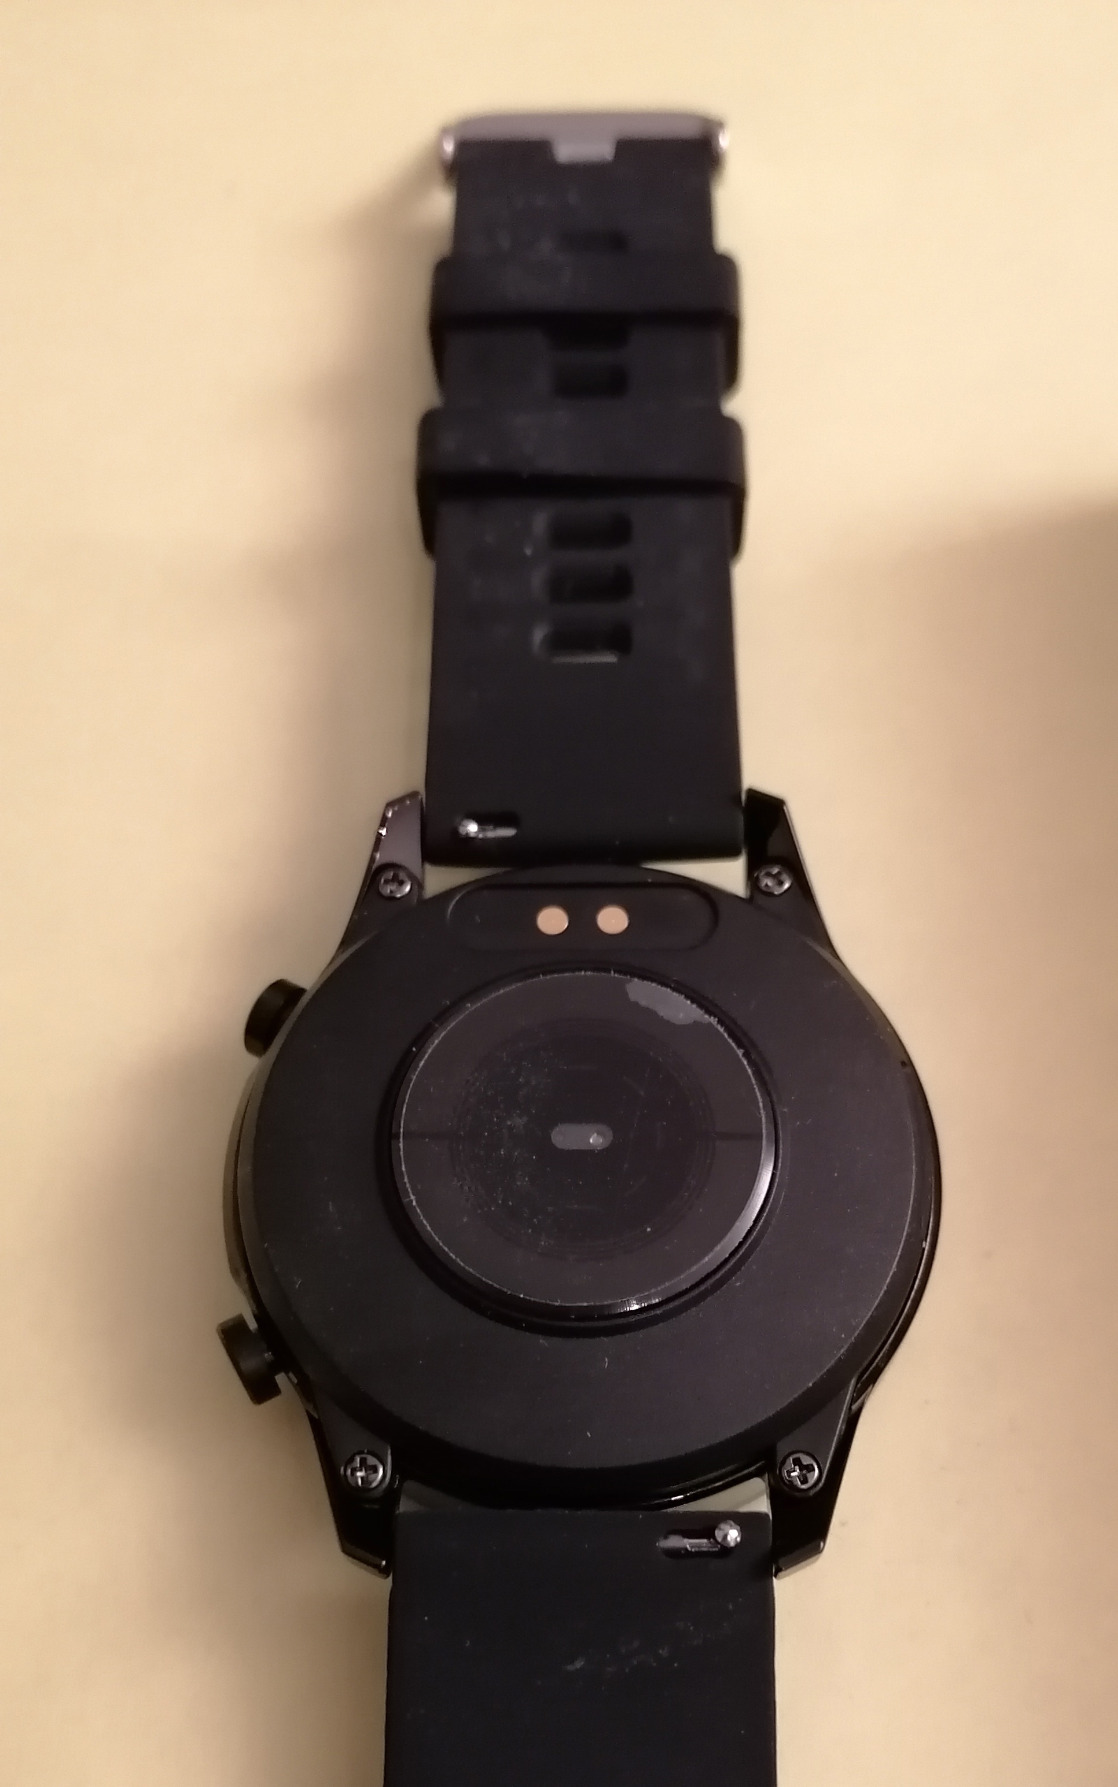 Waterproof Bluetooth smart watch phone photo review